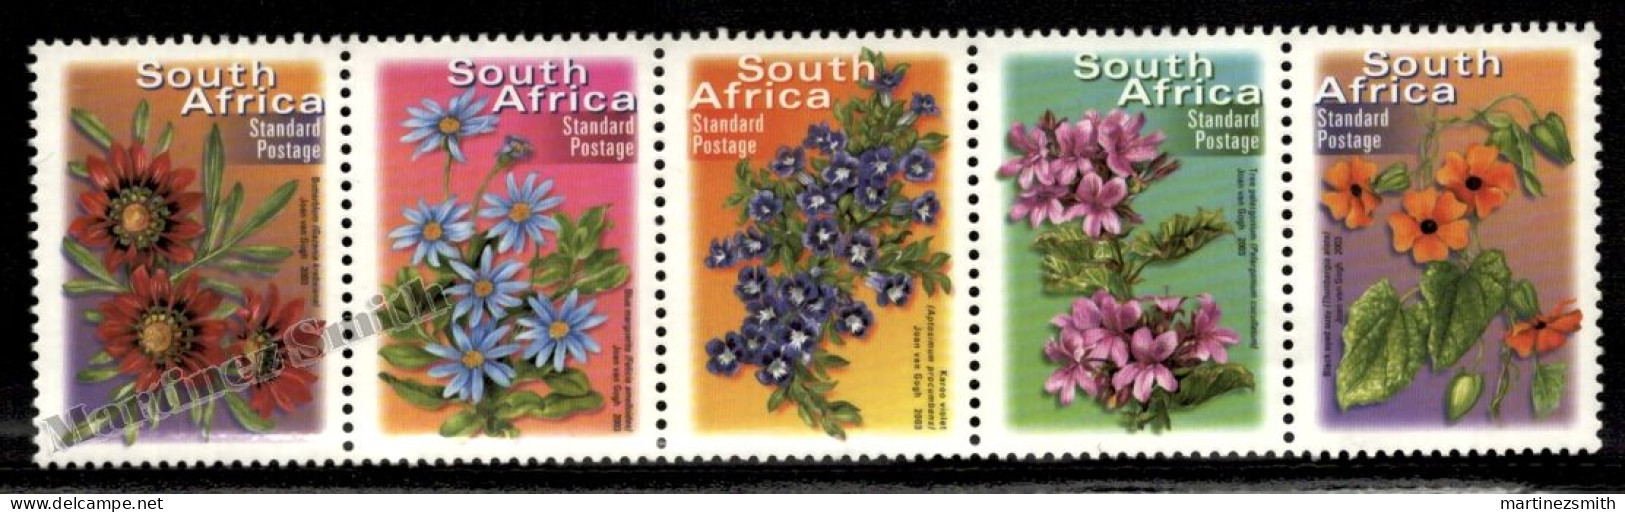 South Africa - Afrique Du Sud - Africa Sur 2001 Yvert  1159 - 63 -Definitive, Flowers - 2007 Reprint - MNH - Ungebraucht